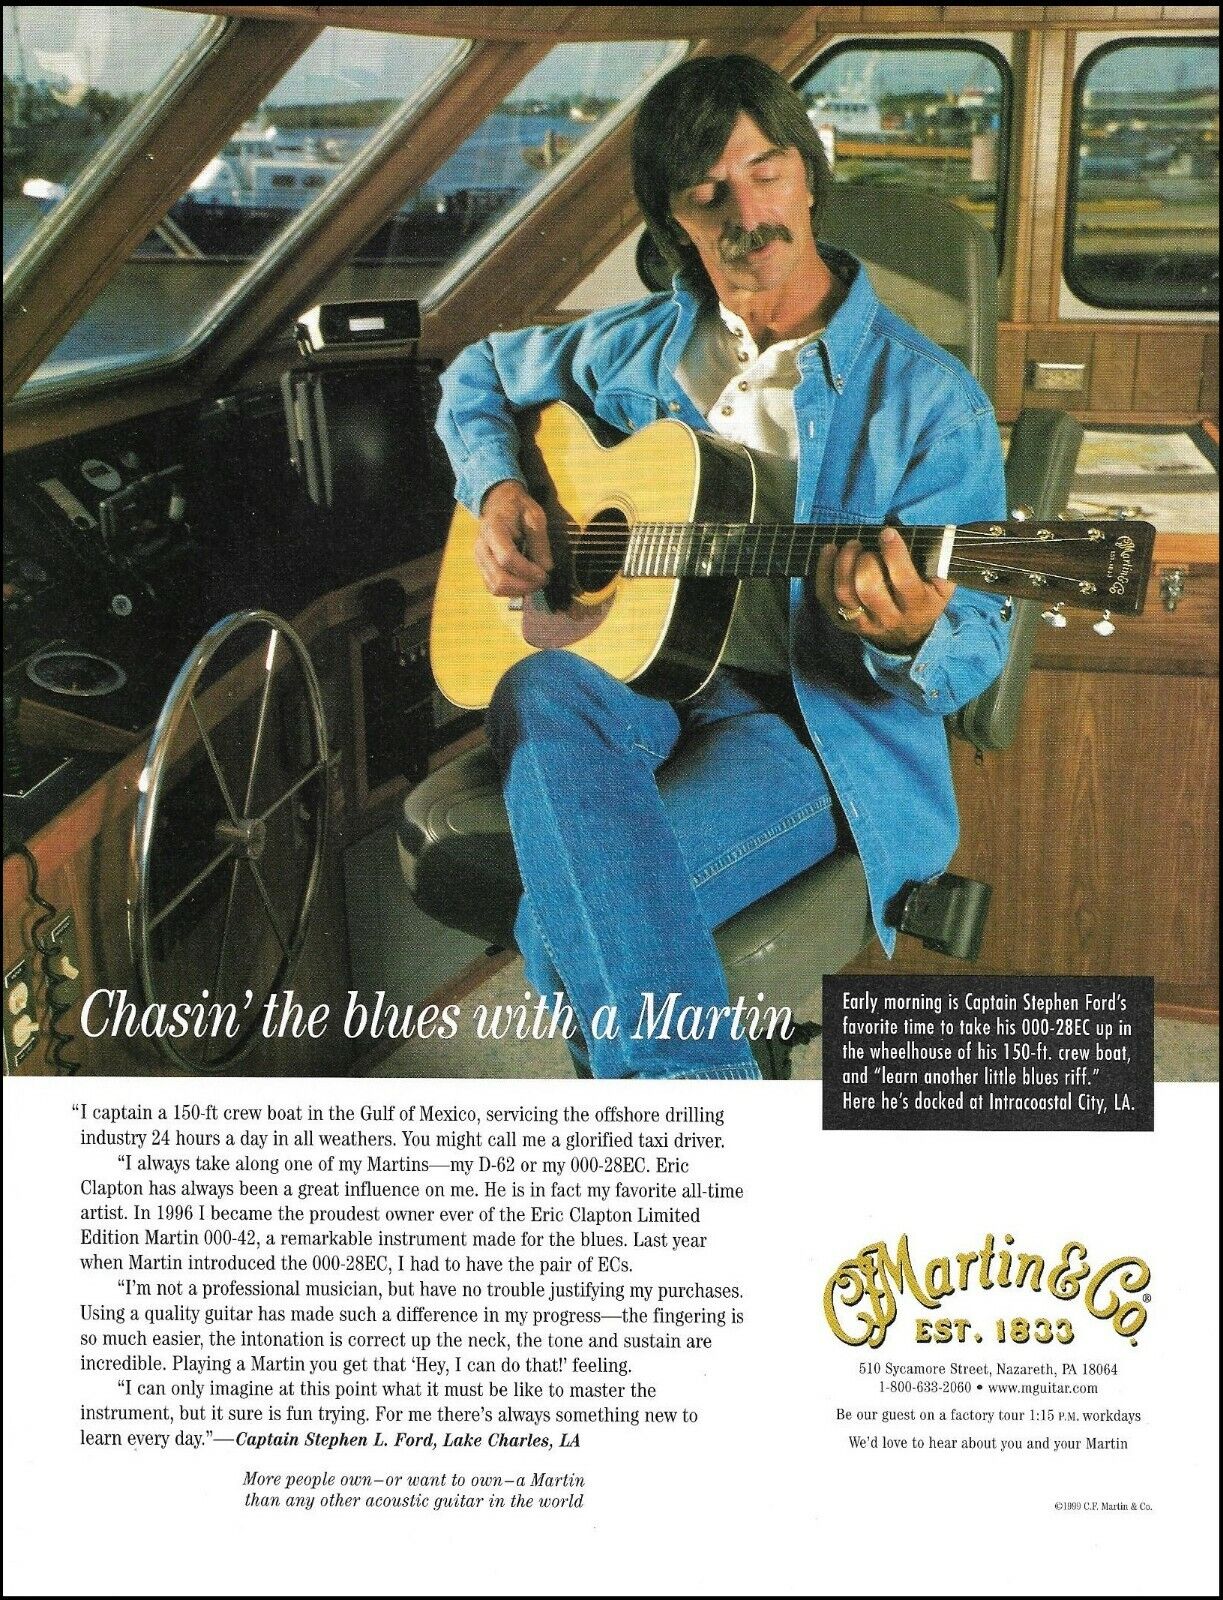 The Martin 000-28EC acoustic guitar 1999 advertisement 8 x 11 ad print